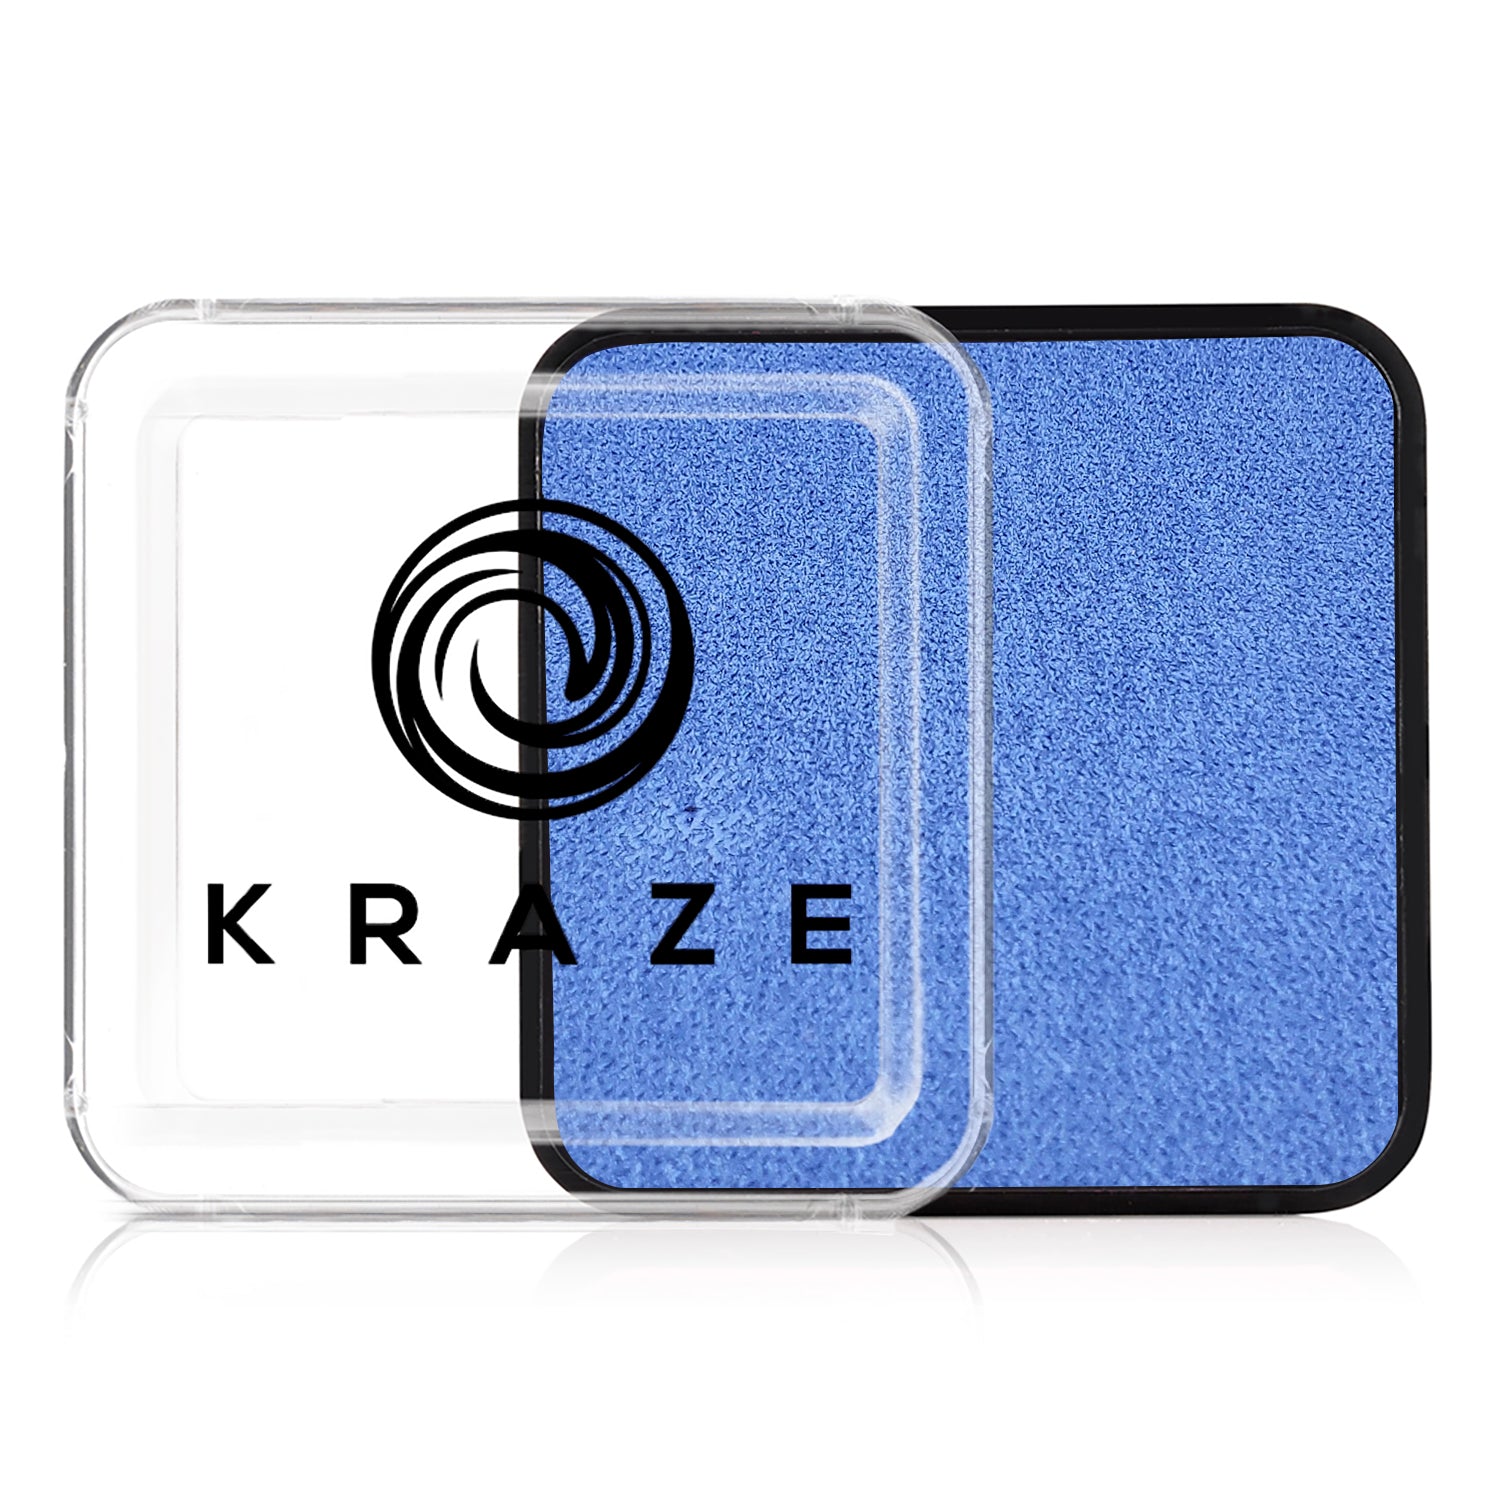 Kraze Square - Metallic Periwinkle (25 gm)